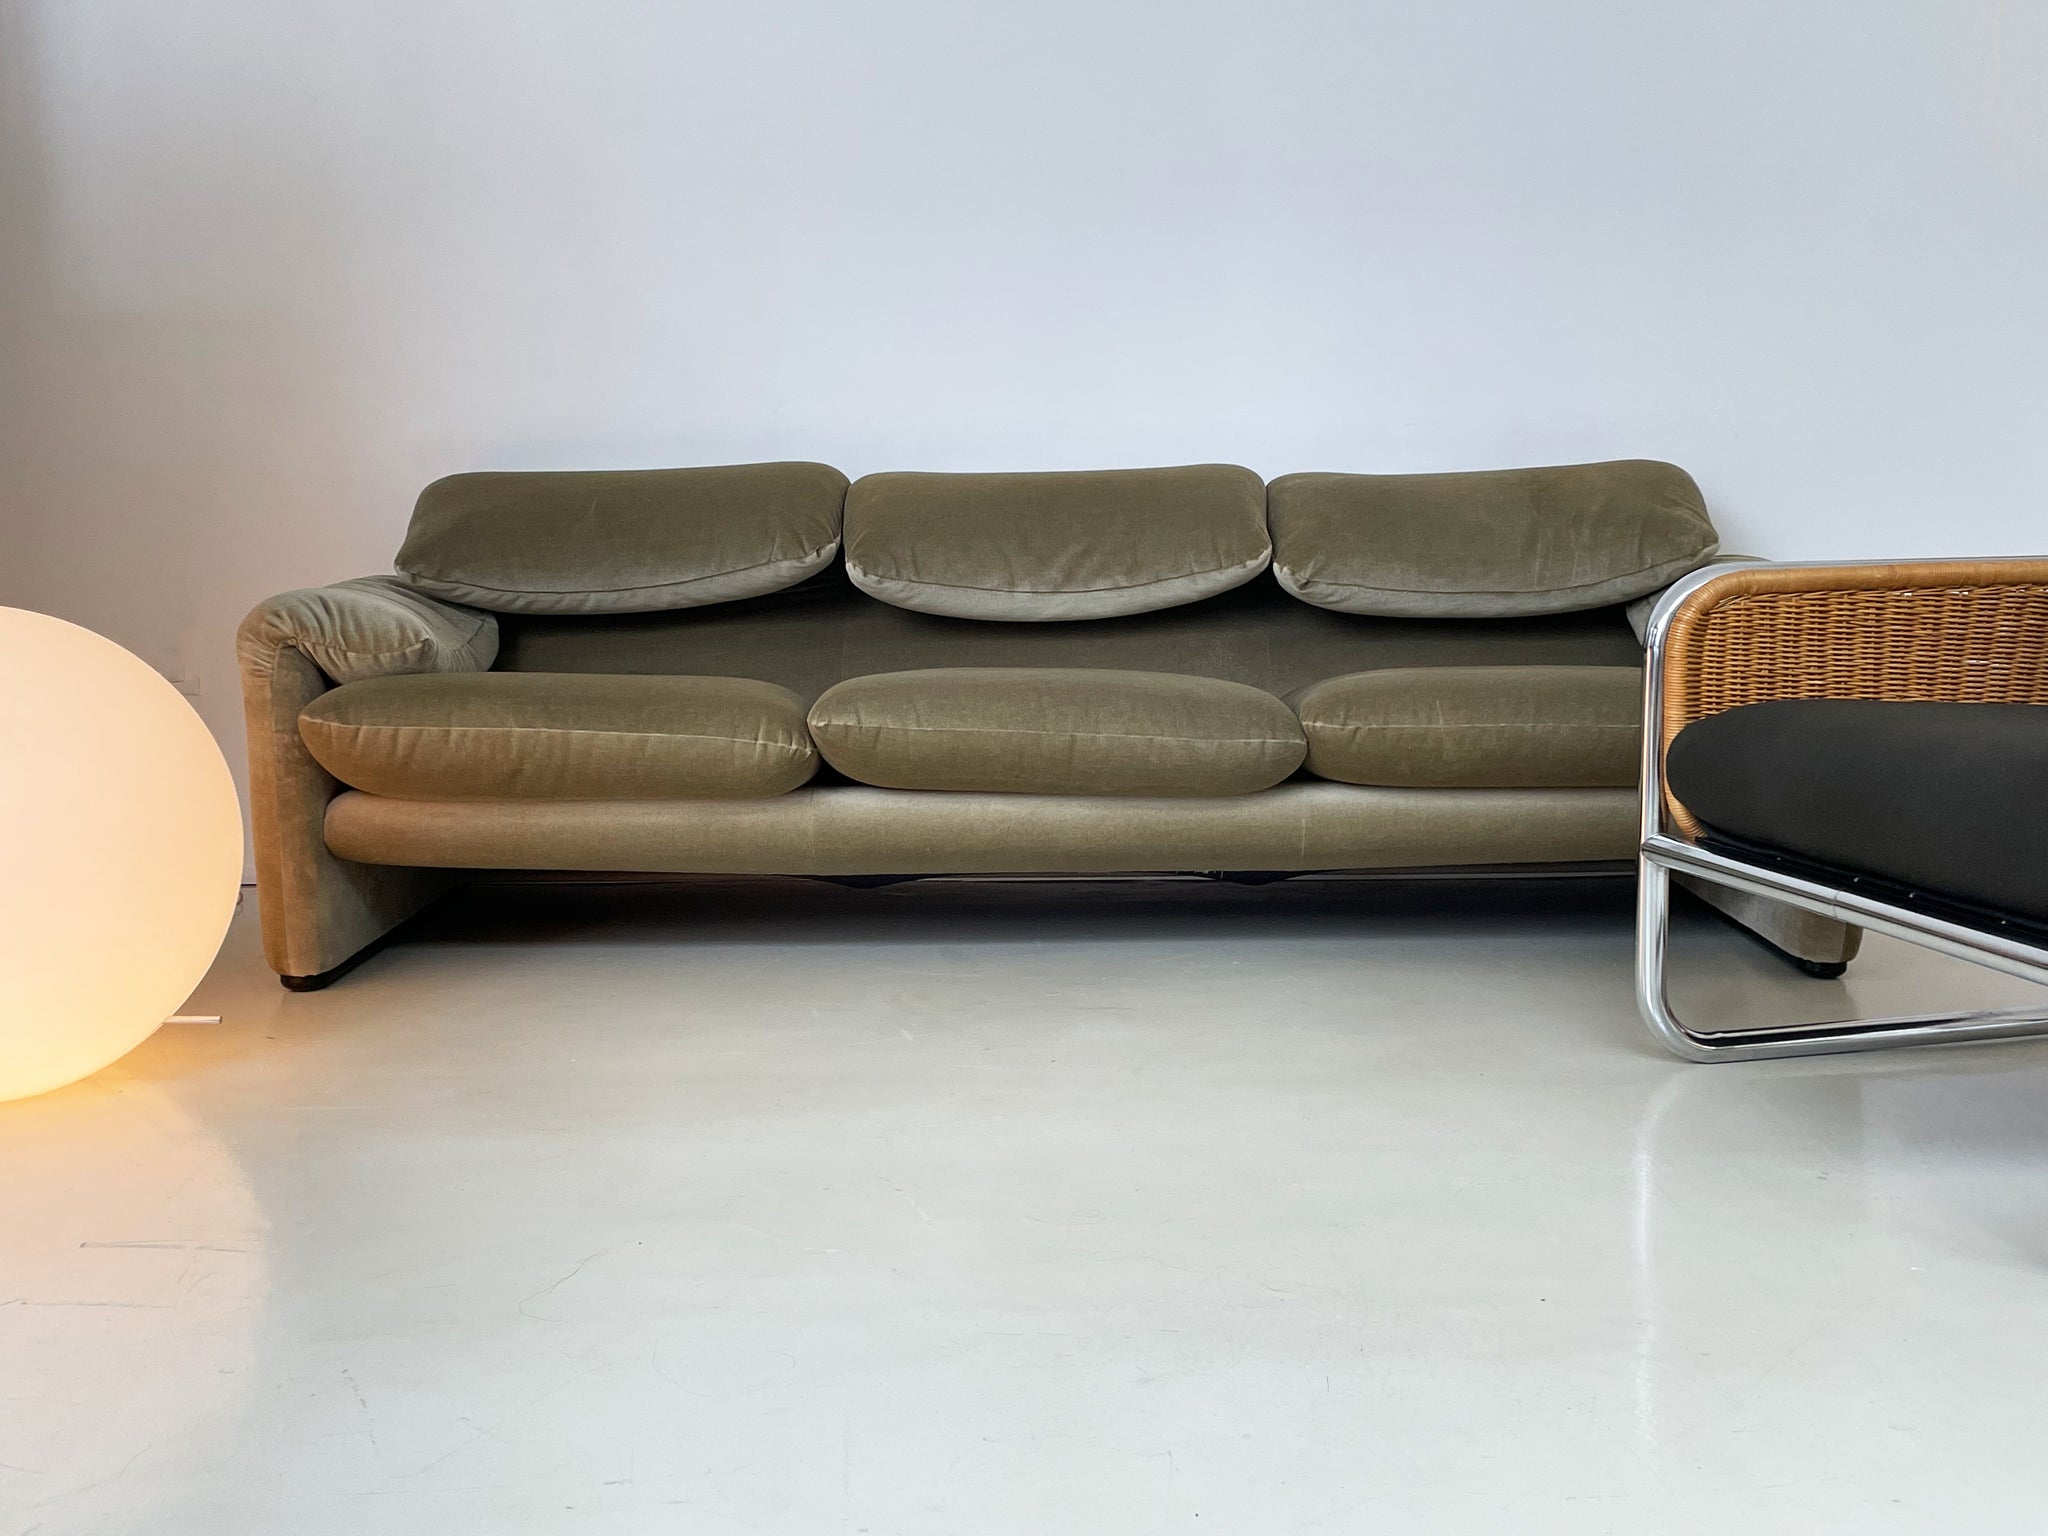 Sage "Maralunga" 3-seater Sofa by Vico Magistretti for Cassina.